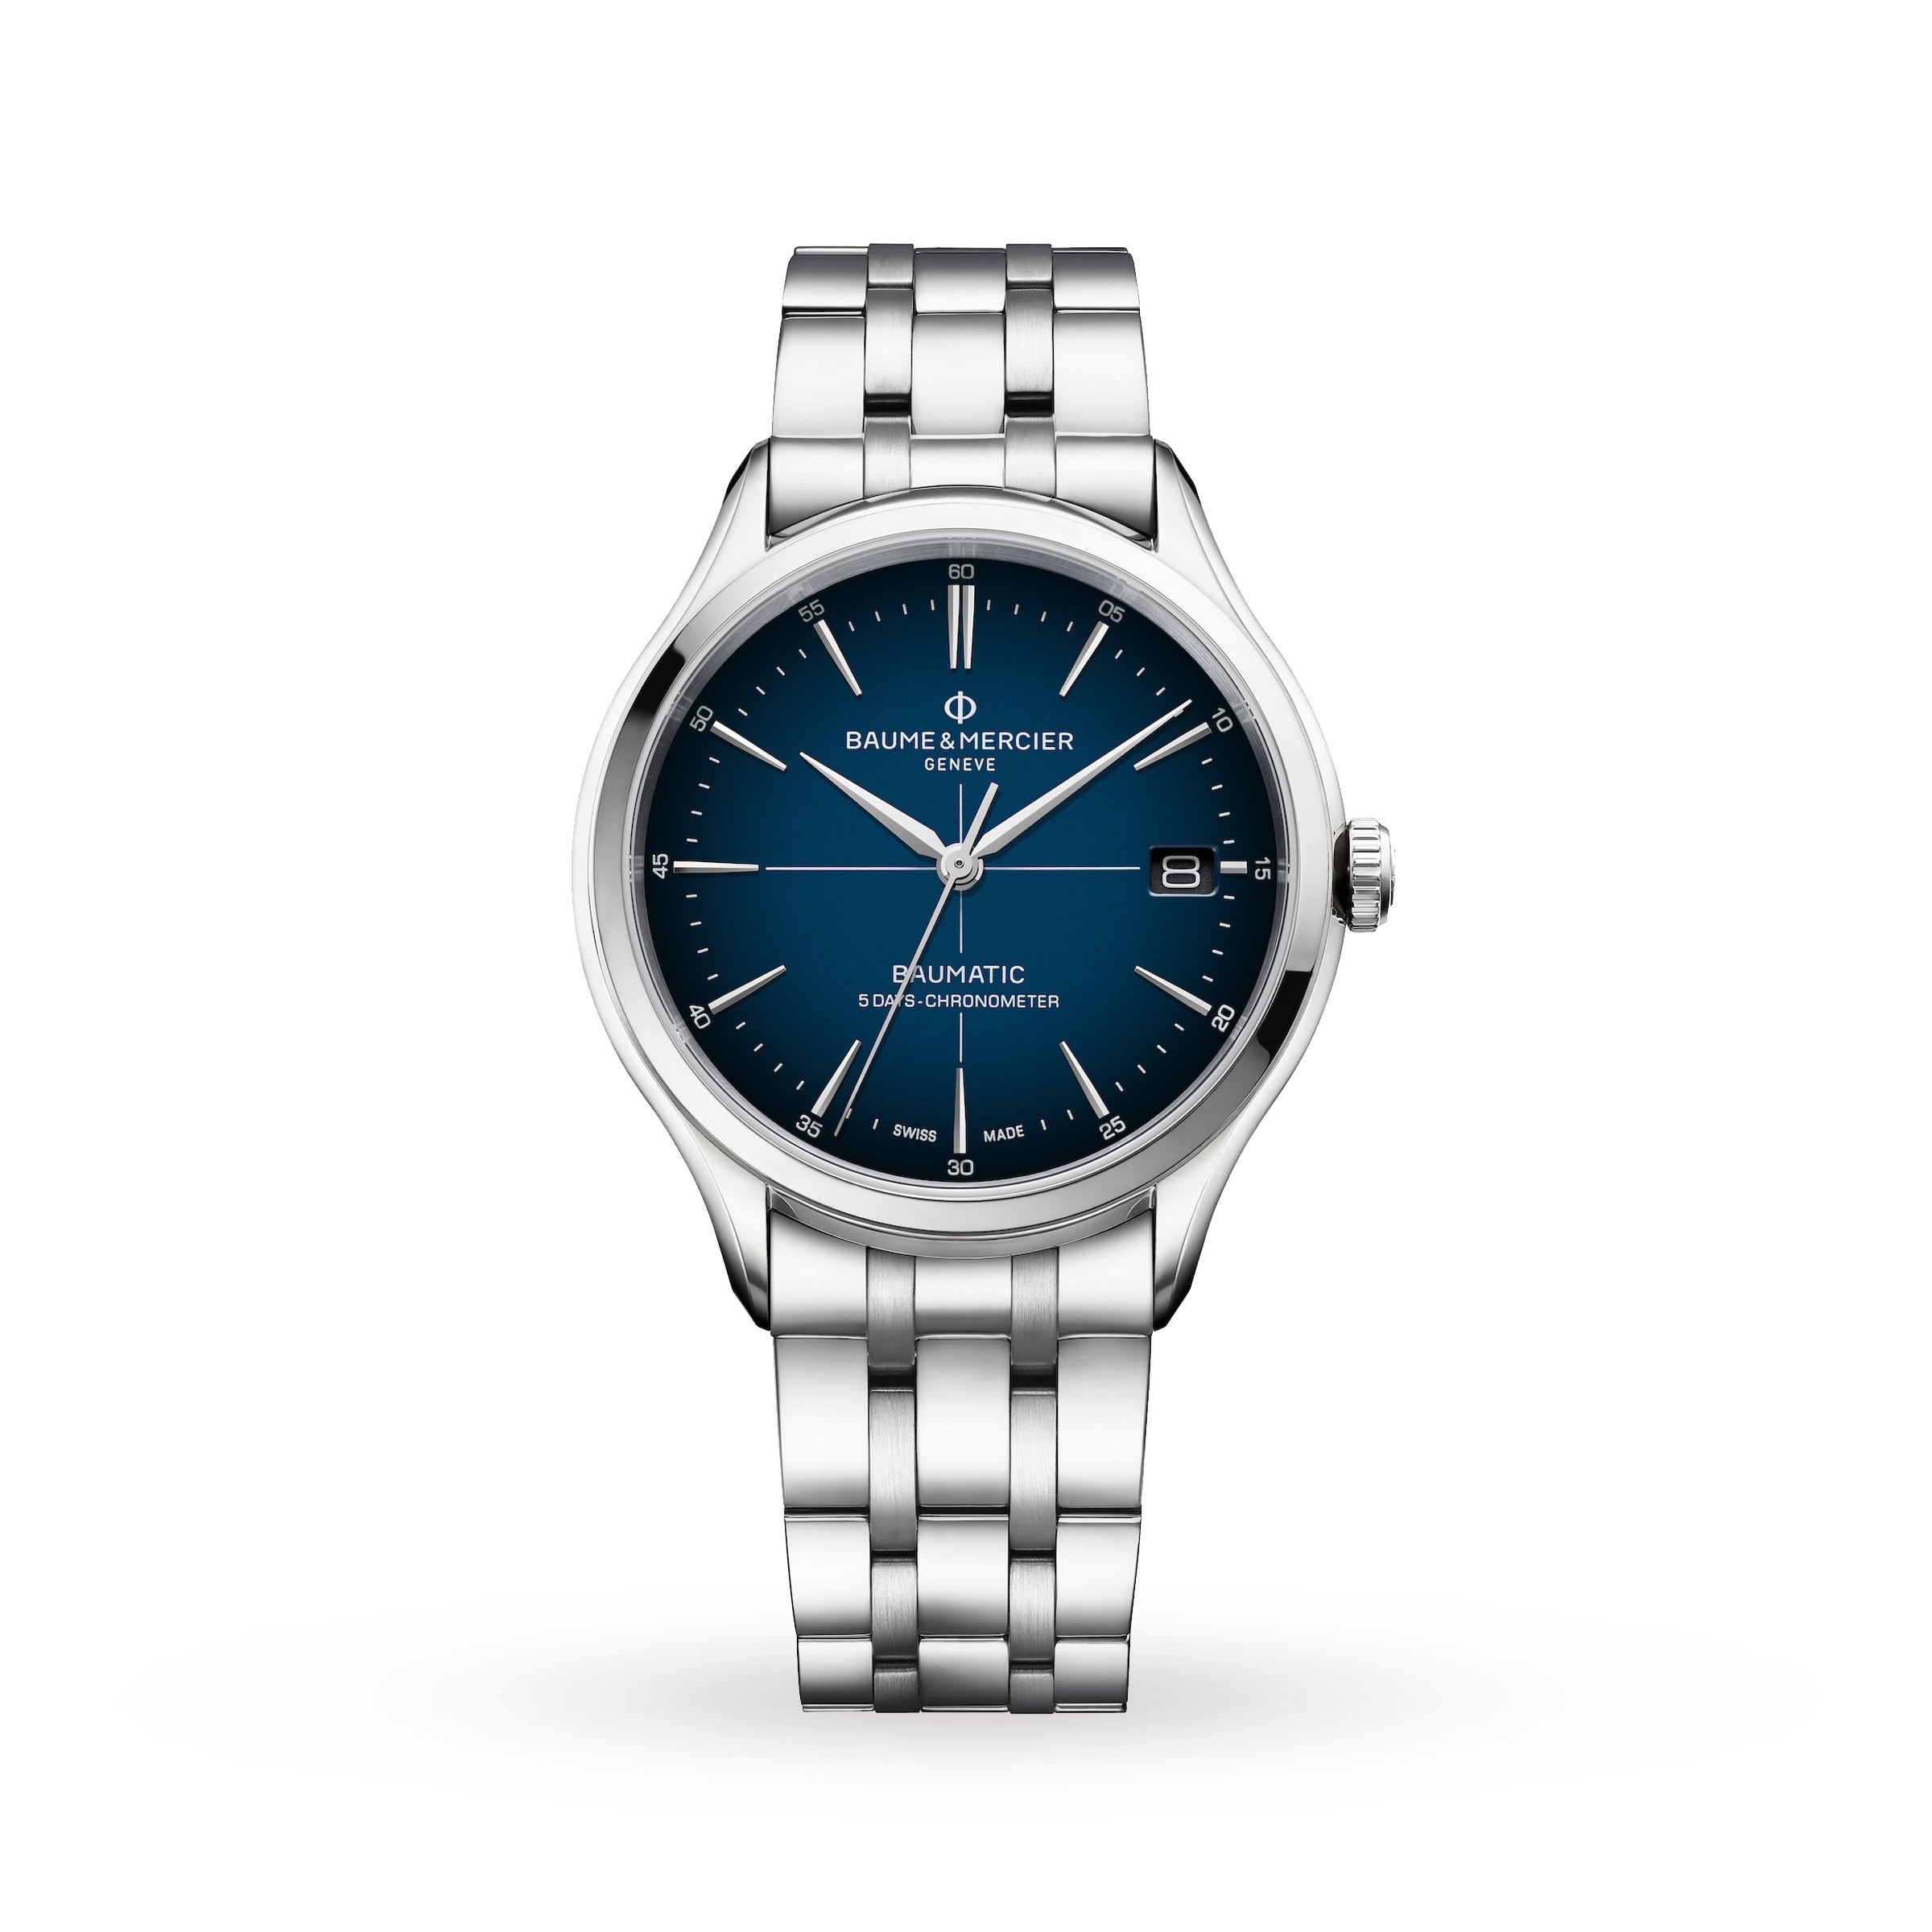 Baume & Mercier Clifton Baumatic 5-Days Chronometer Watch Hands-On |  aBlogtoWatch